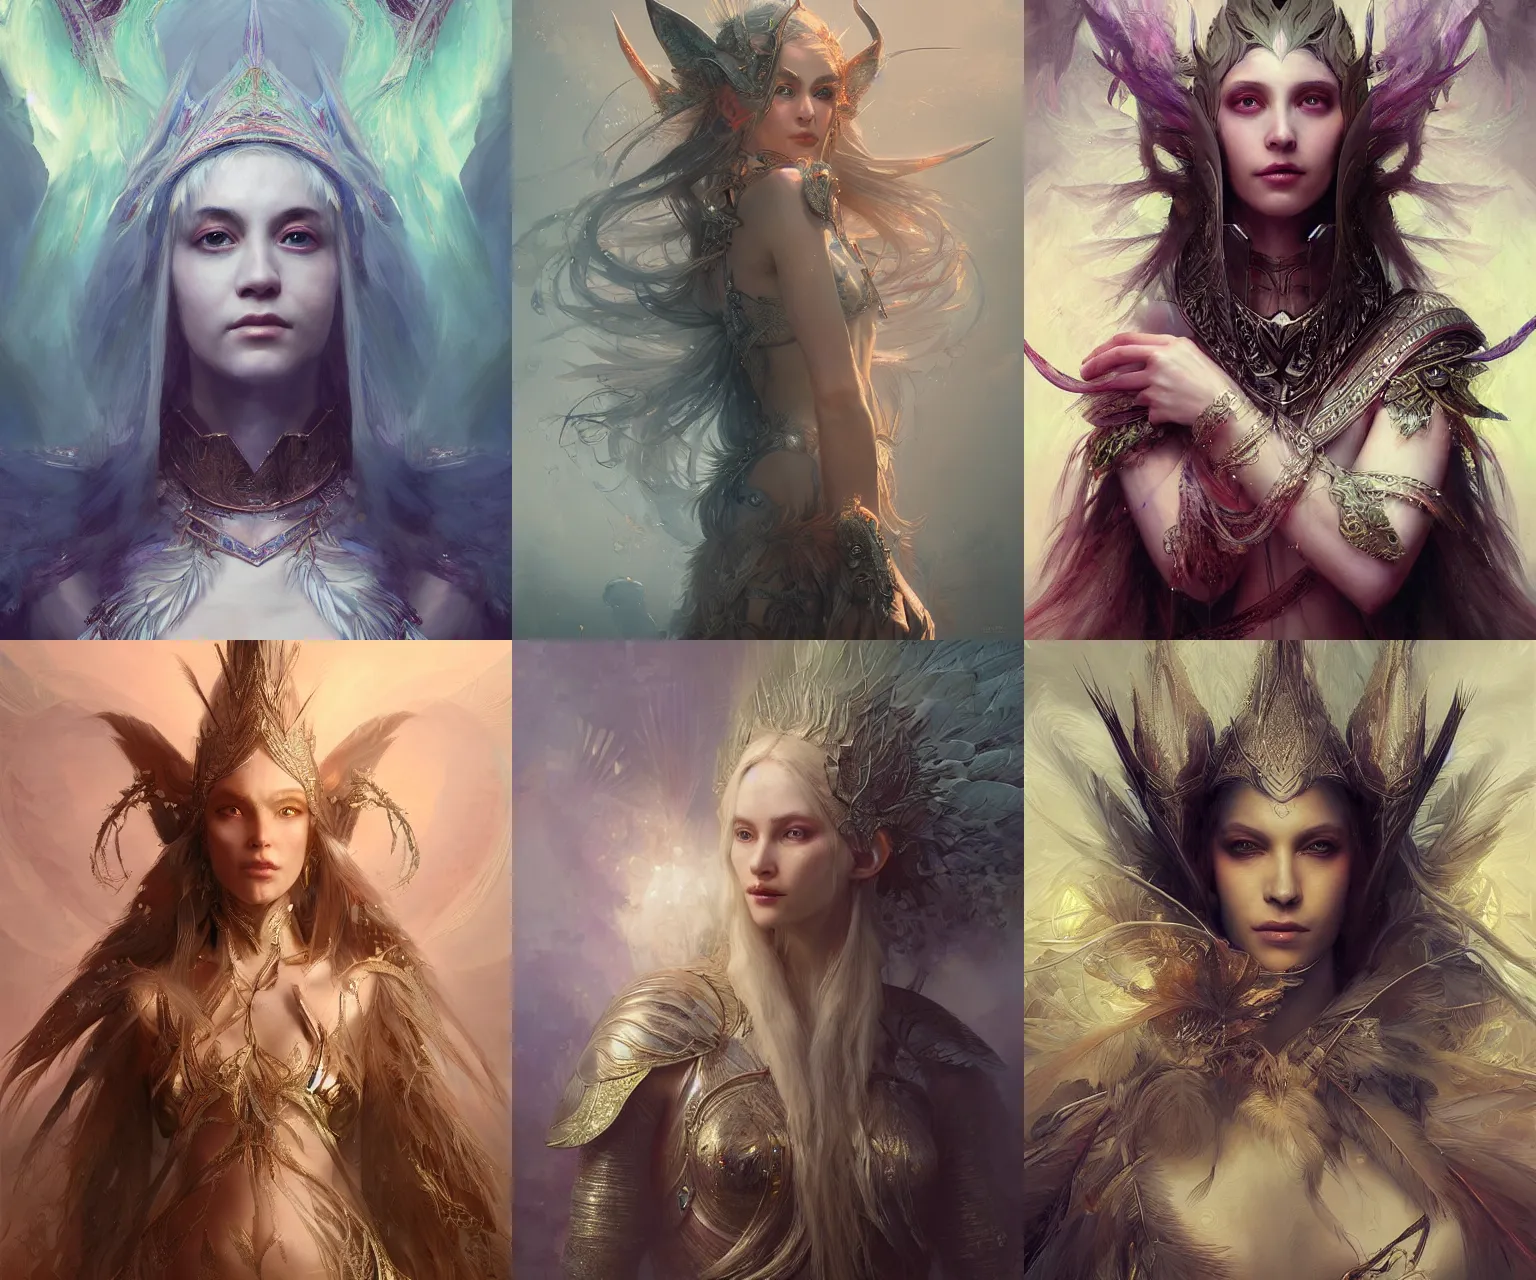 Prompt: portrait of elven queen, feathers, fractals, emissive, volumetric lights, by ruan jia and wlop and karol bak